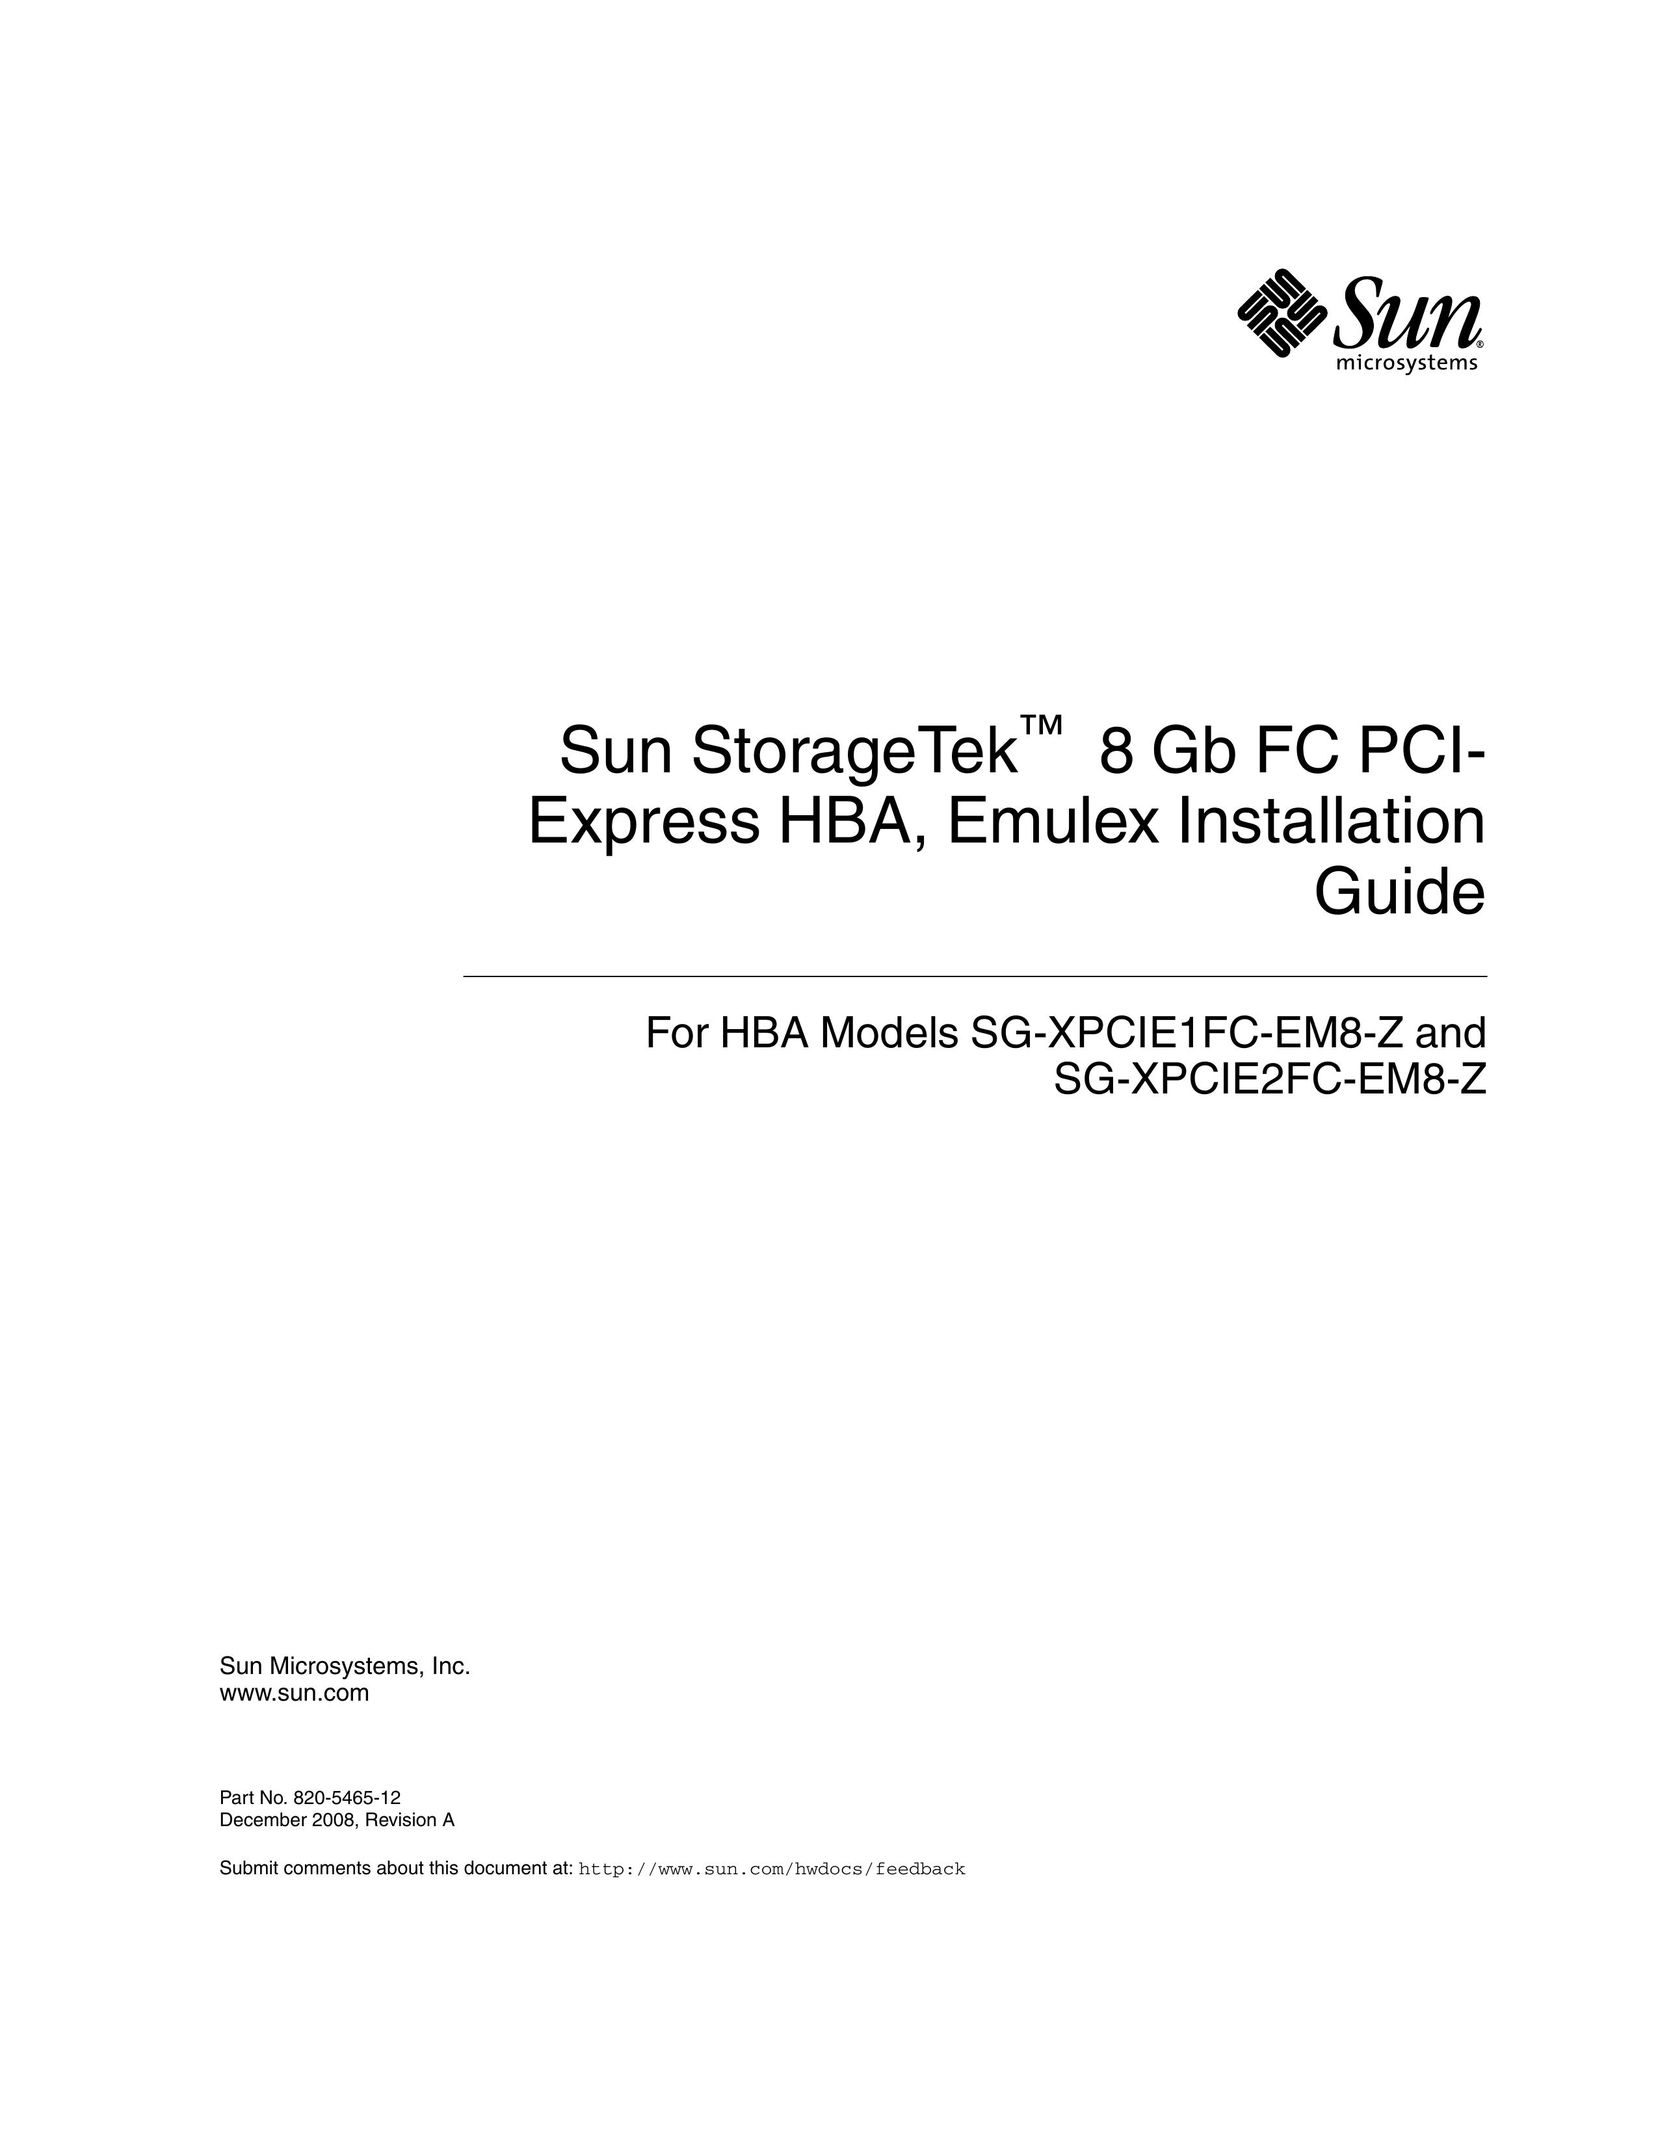 Sun Microsystems SG-XPCIE1FC-EM8-Z Network Card User Manual